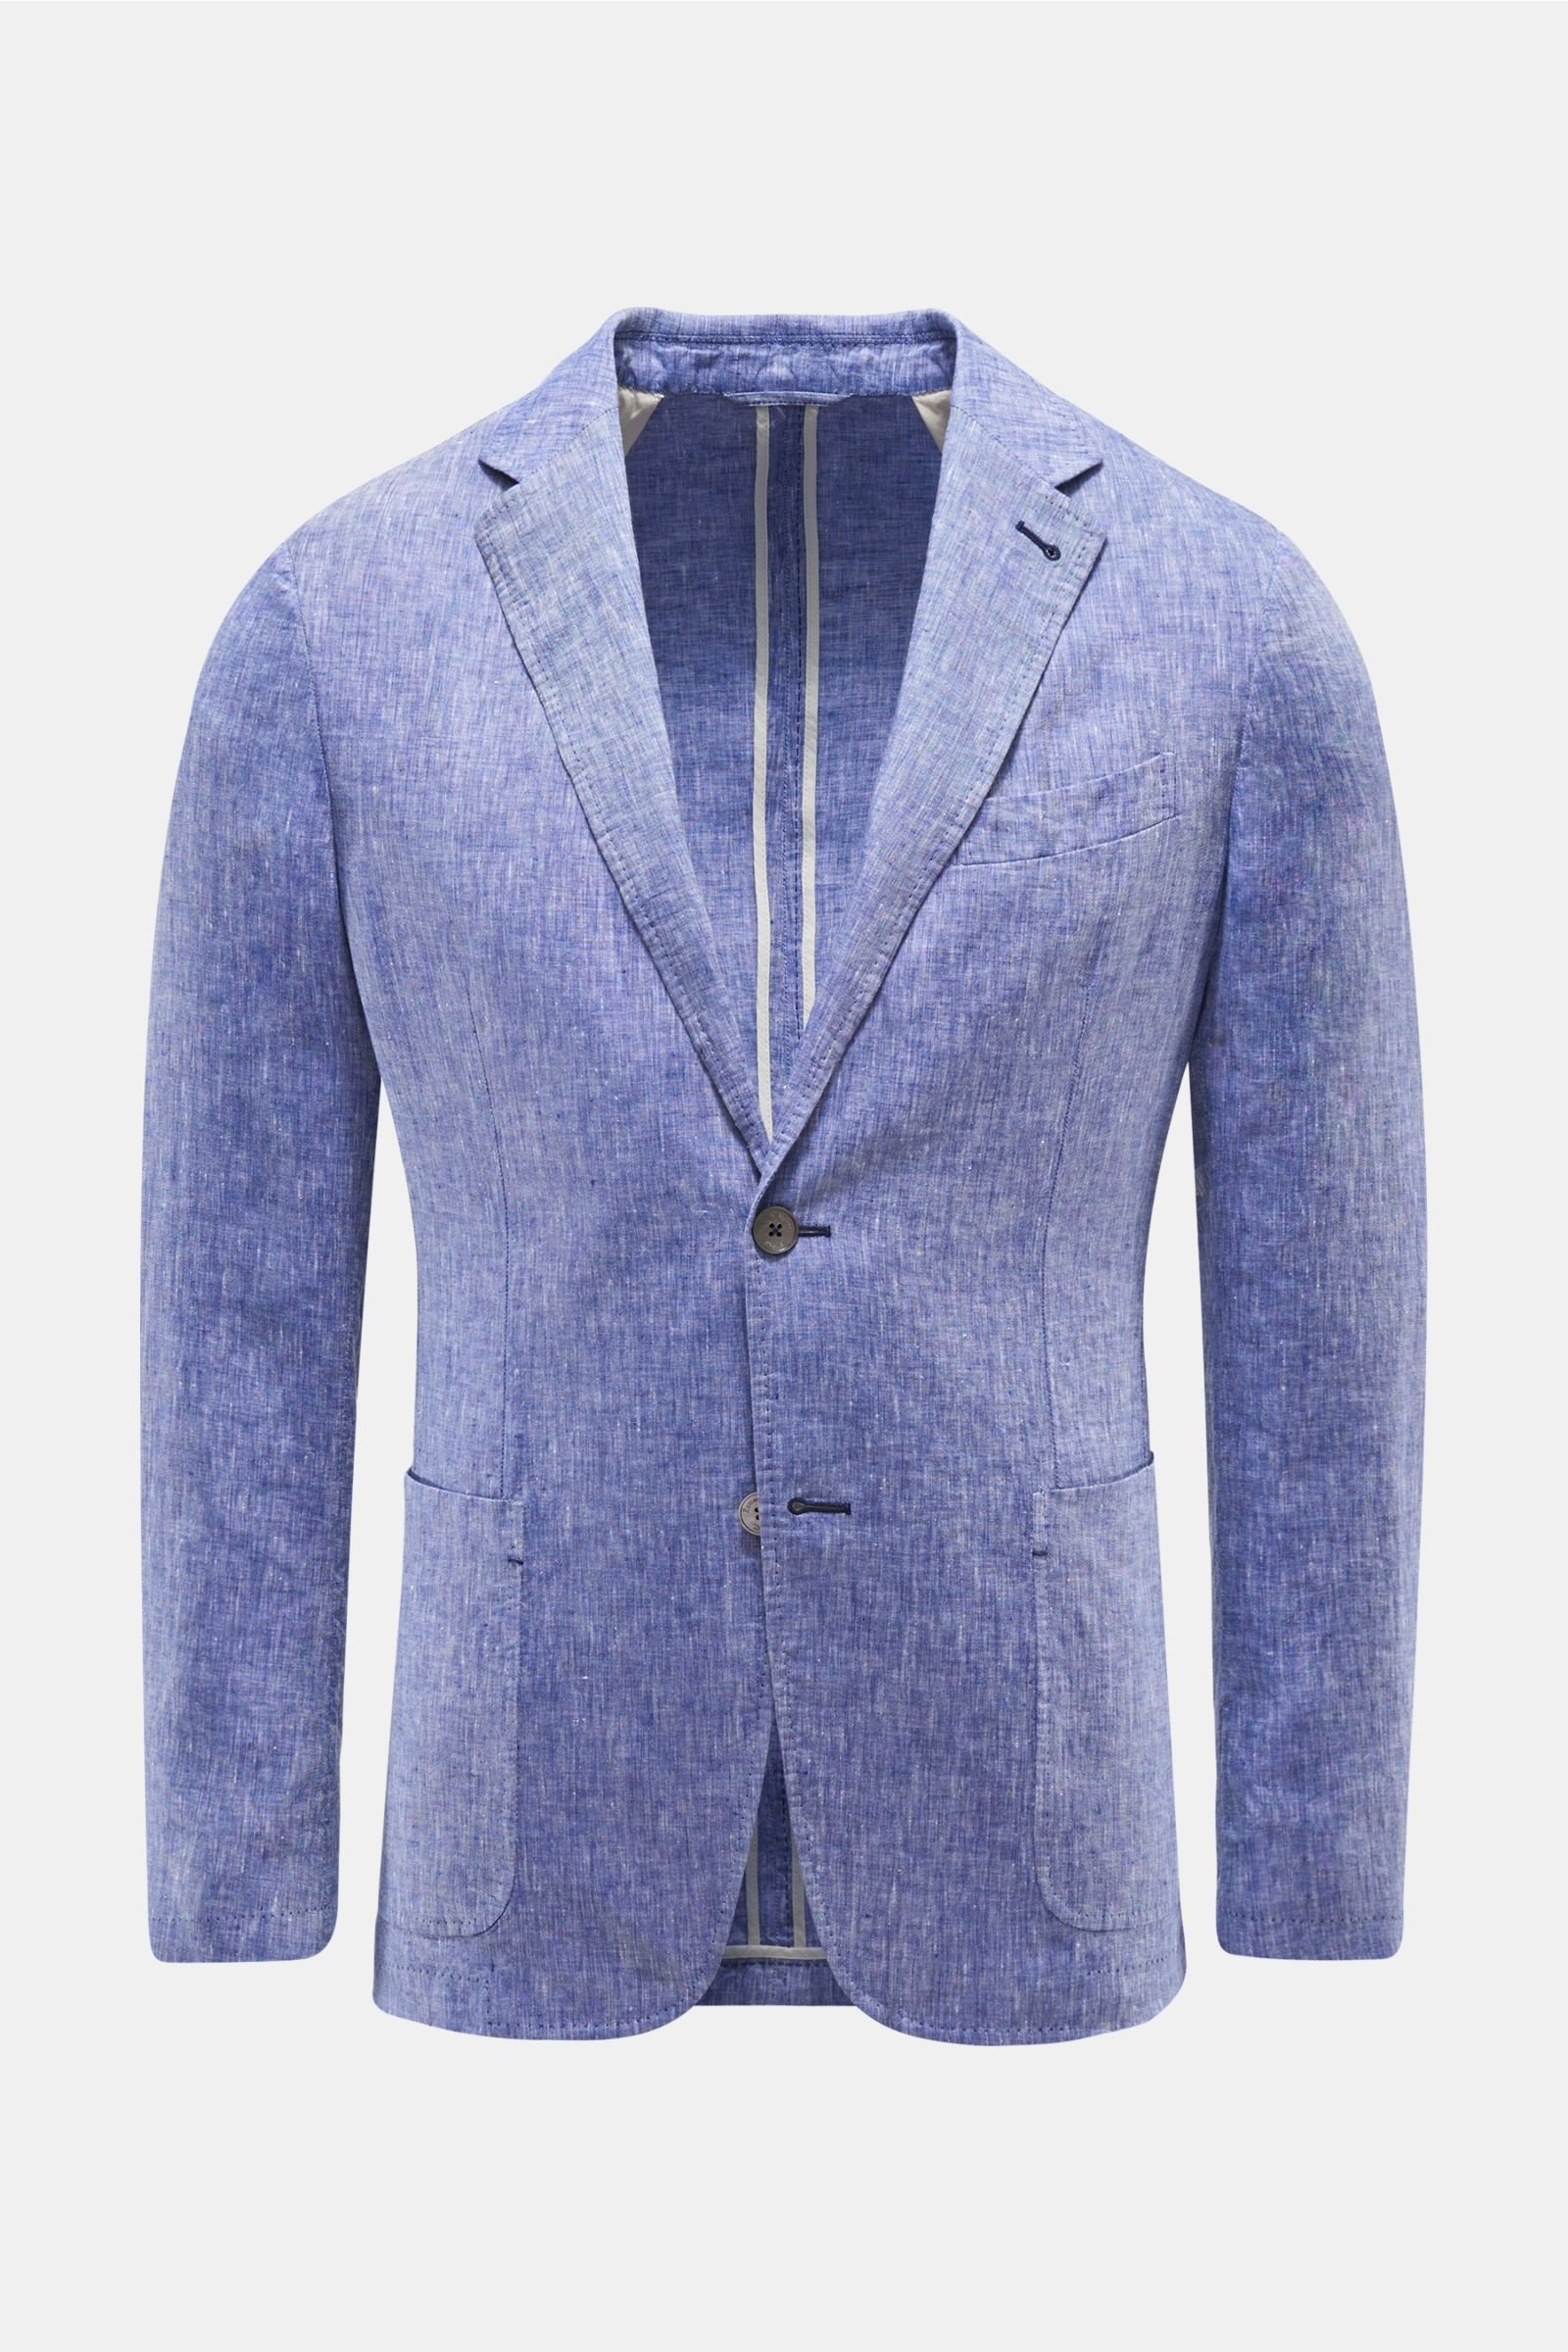 Linen smart-casual jacket grey-blue